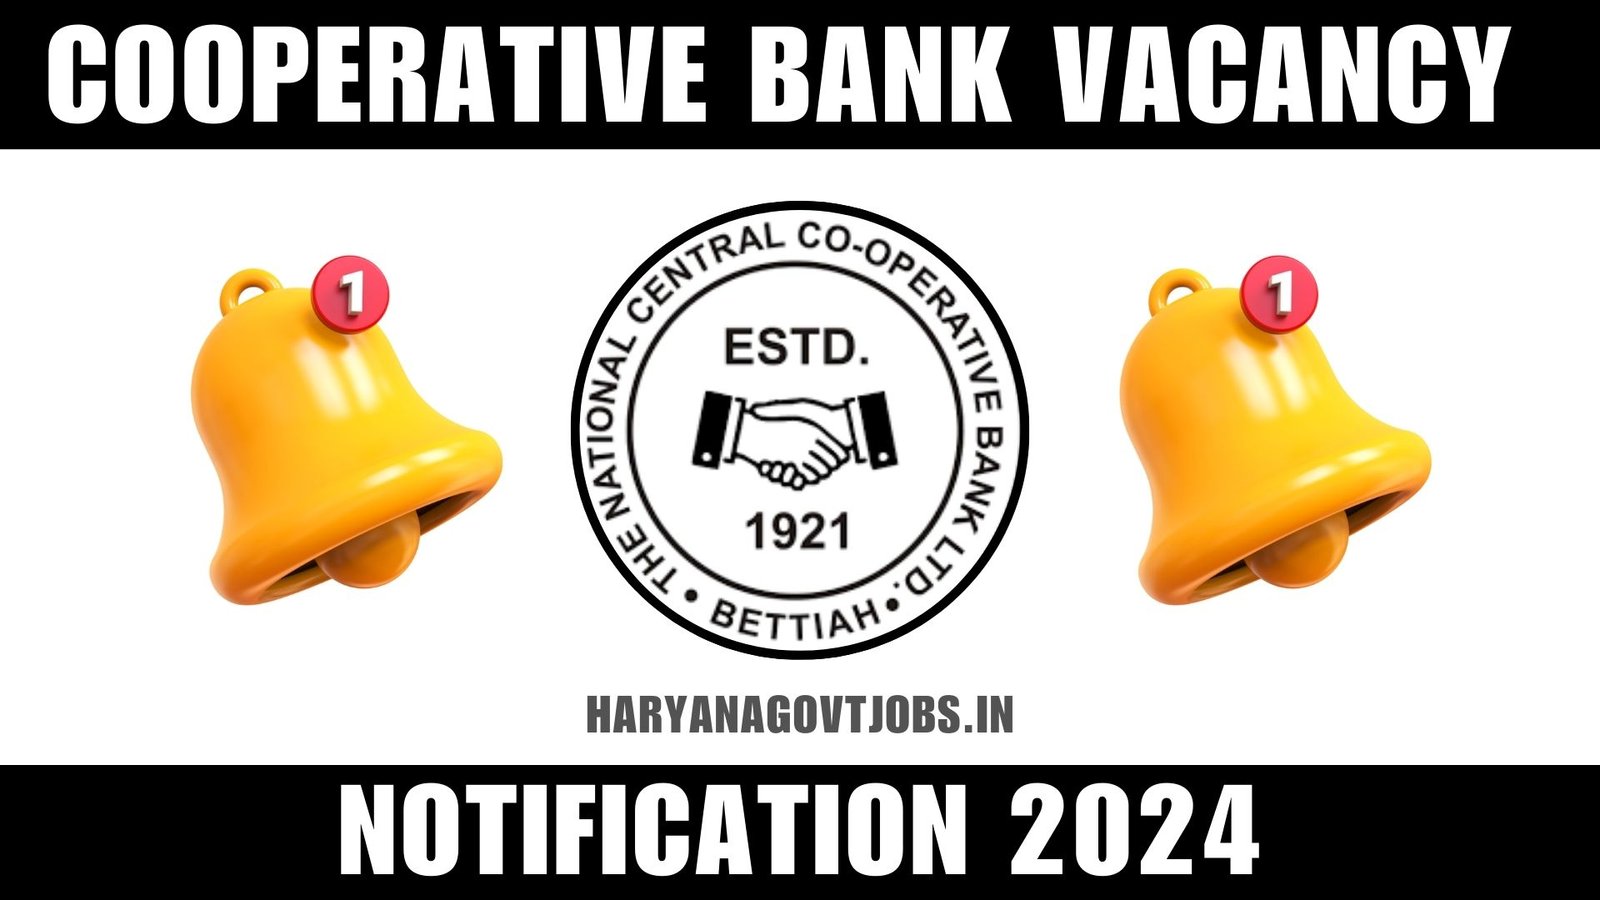 Cooperative Bank Vacancy Notification 2024 : Overview